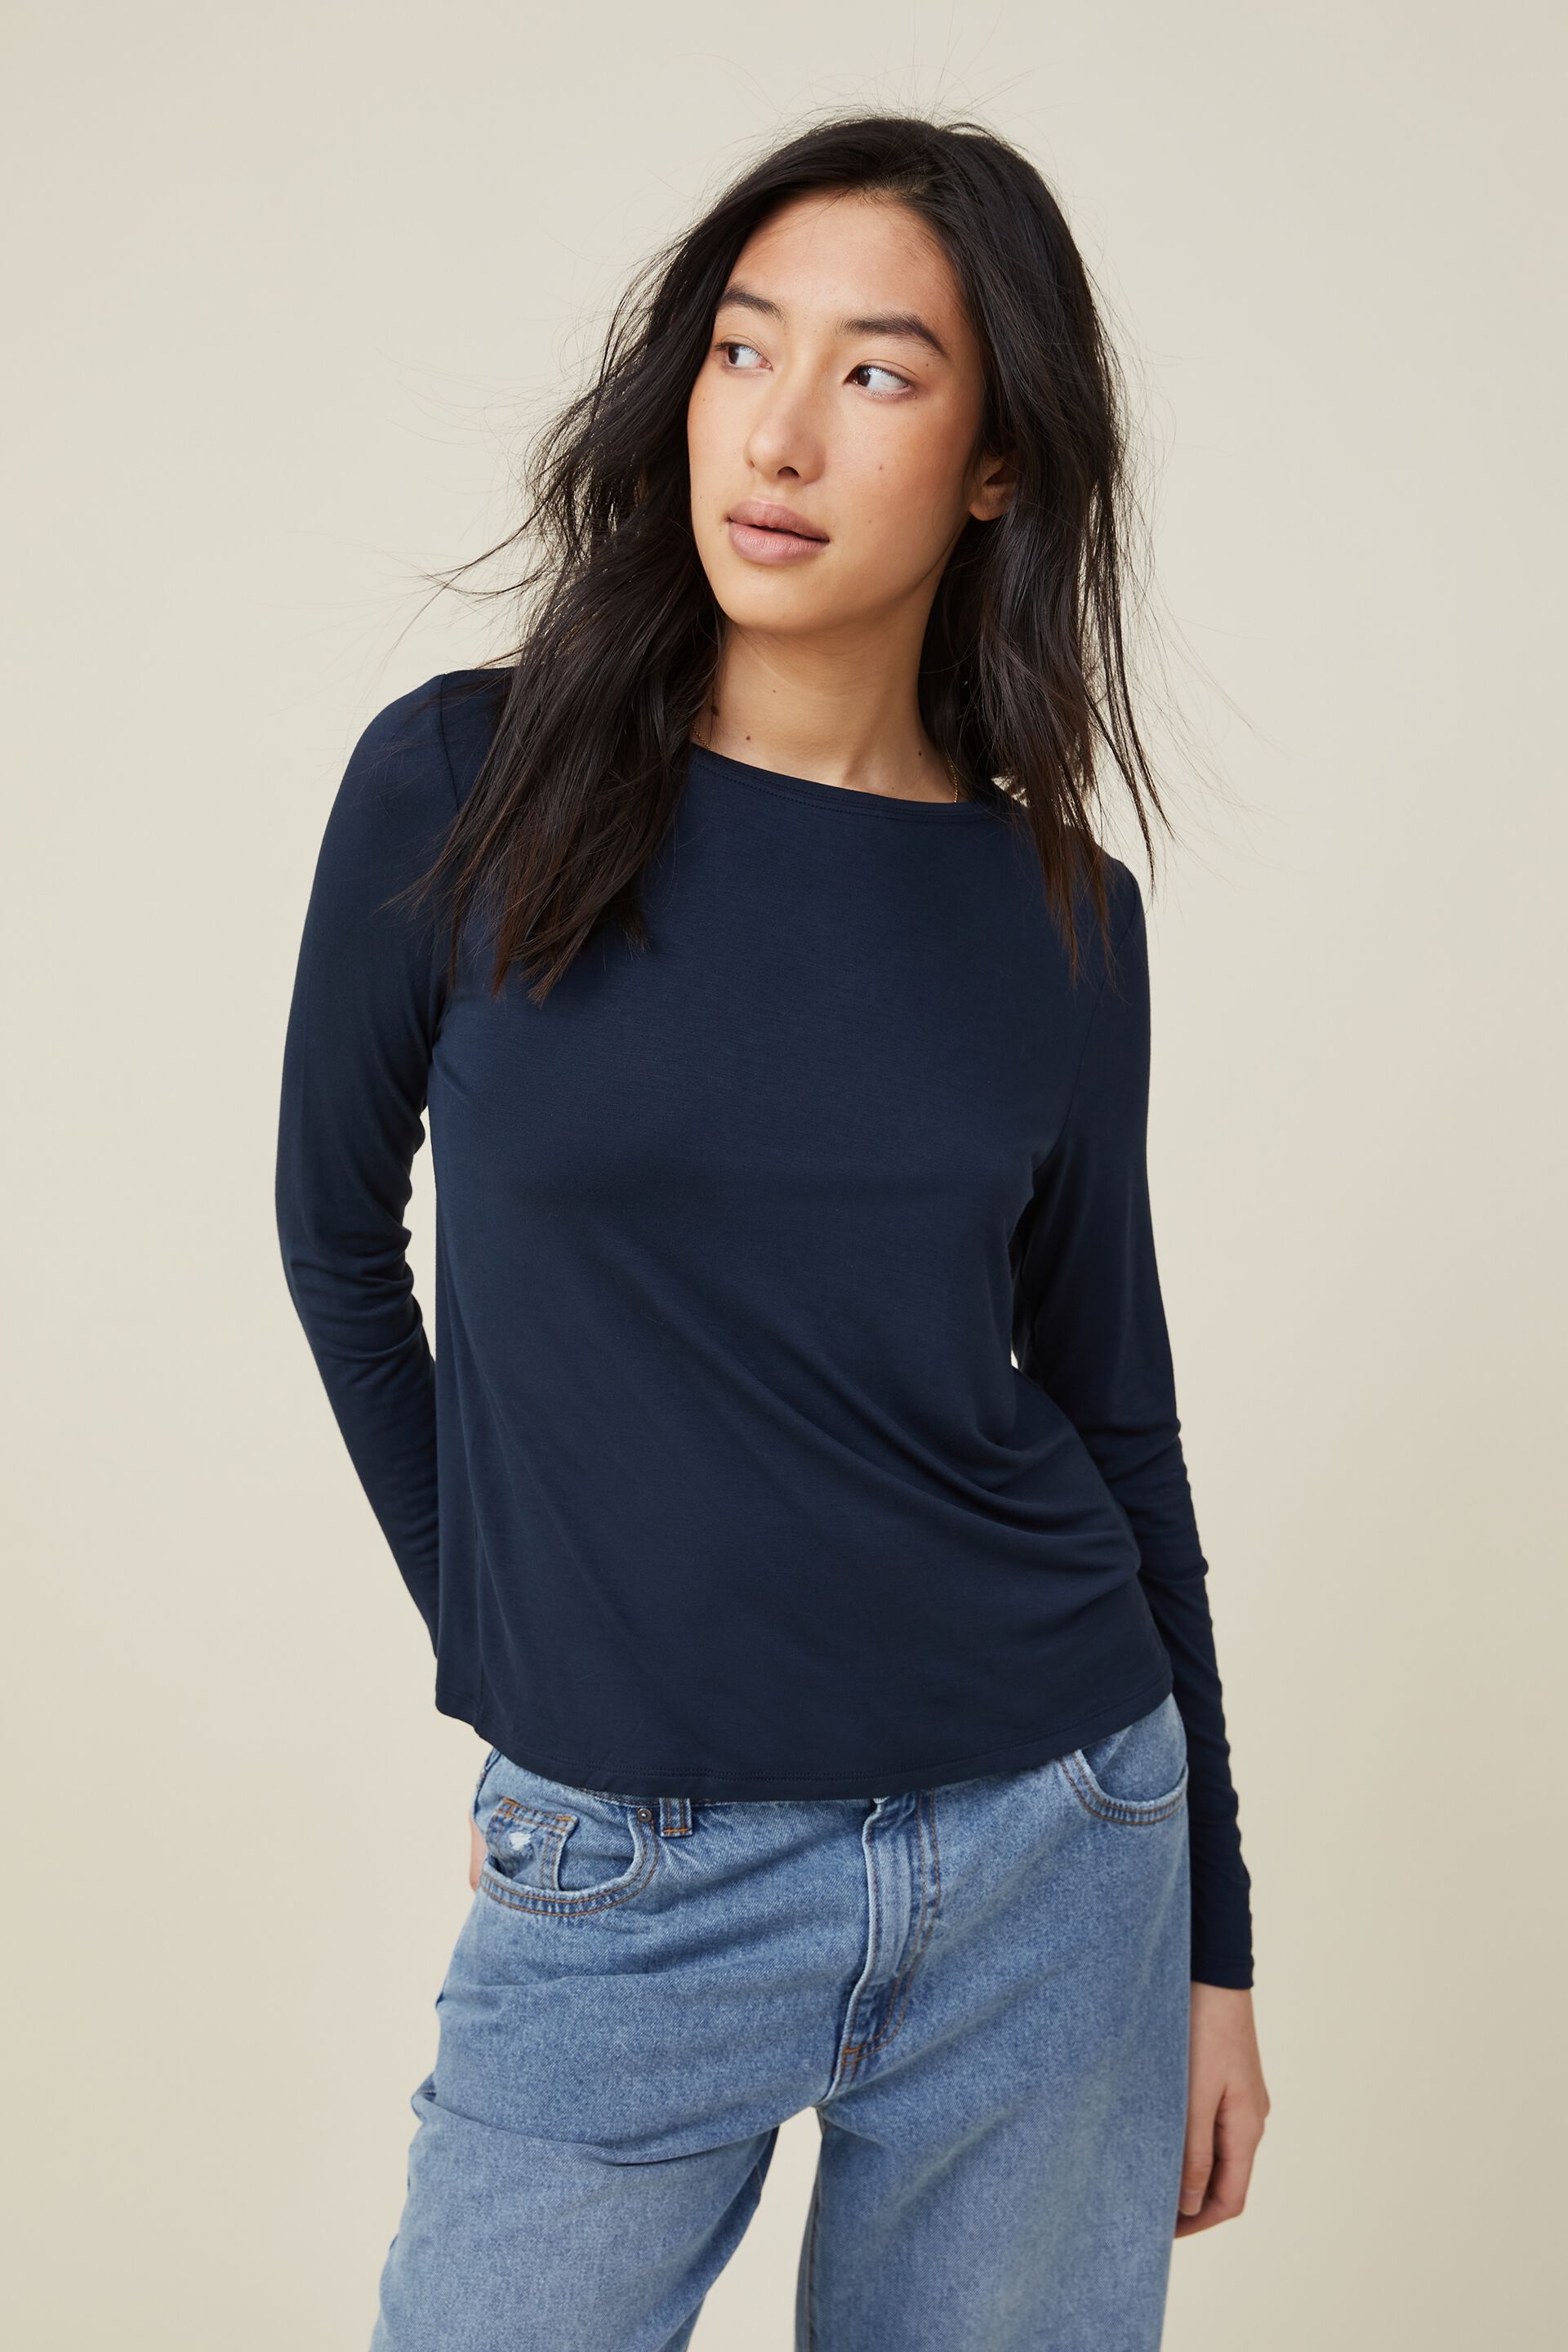 Berryhot Women Fashion Gradient Color Block Loose Long Sleeve Shirt Tops Comfy Cotton Crew Neck Pullover Sweatshirt 